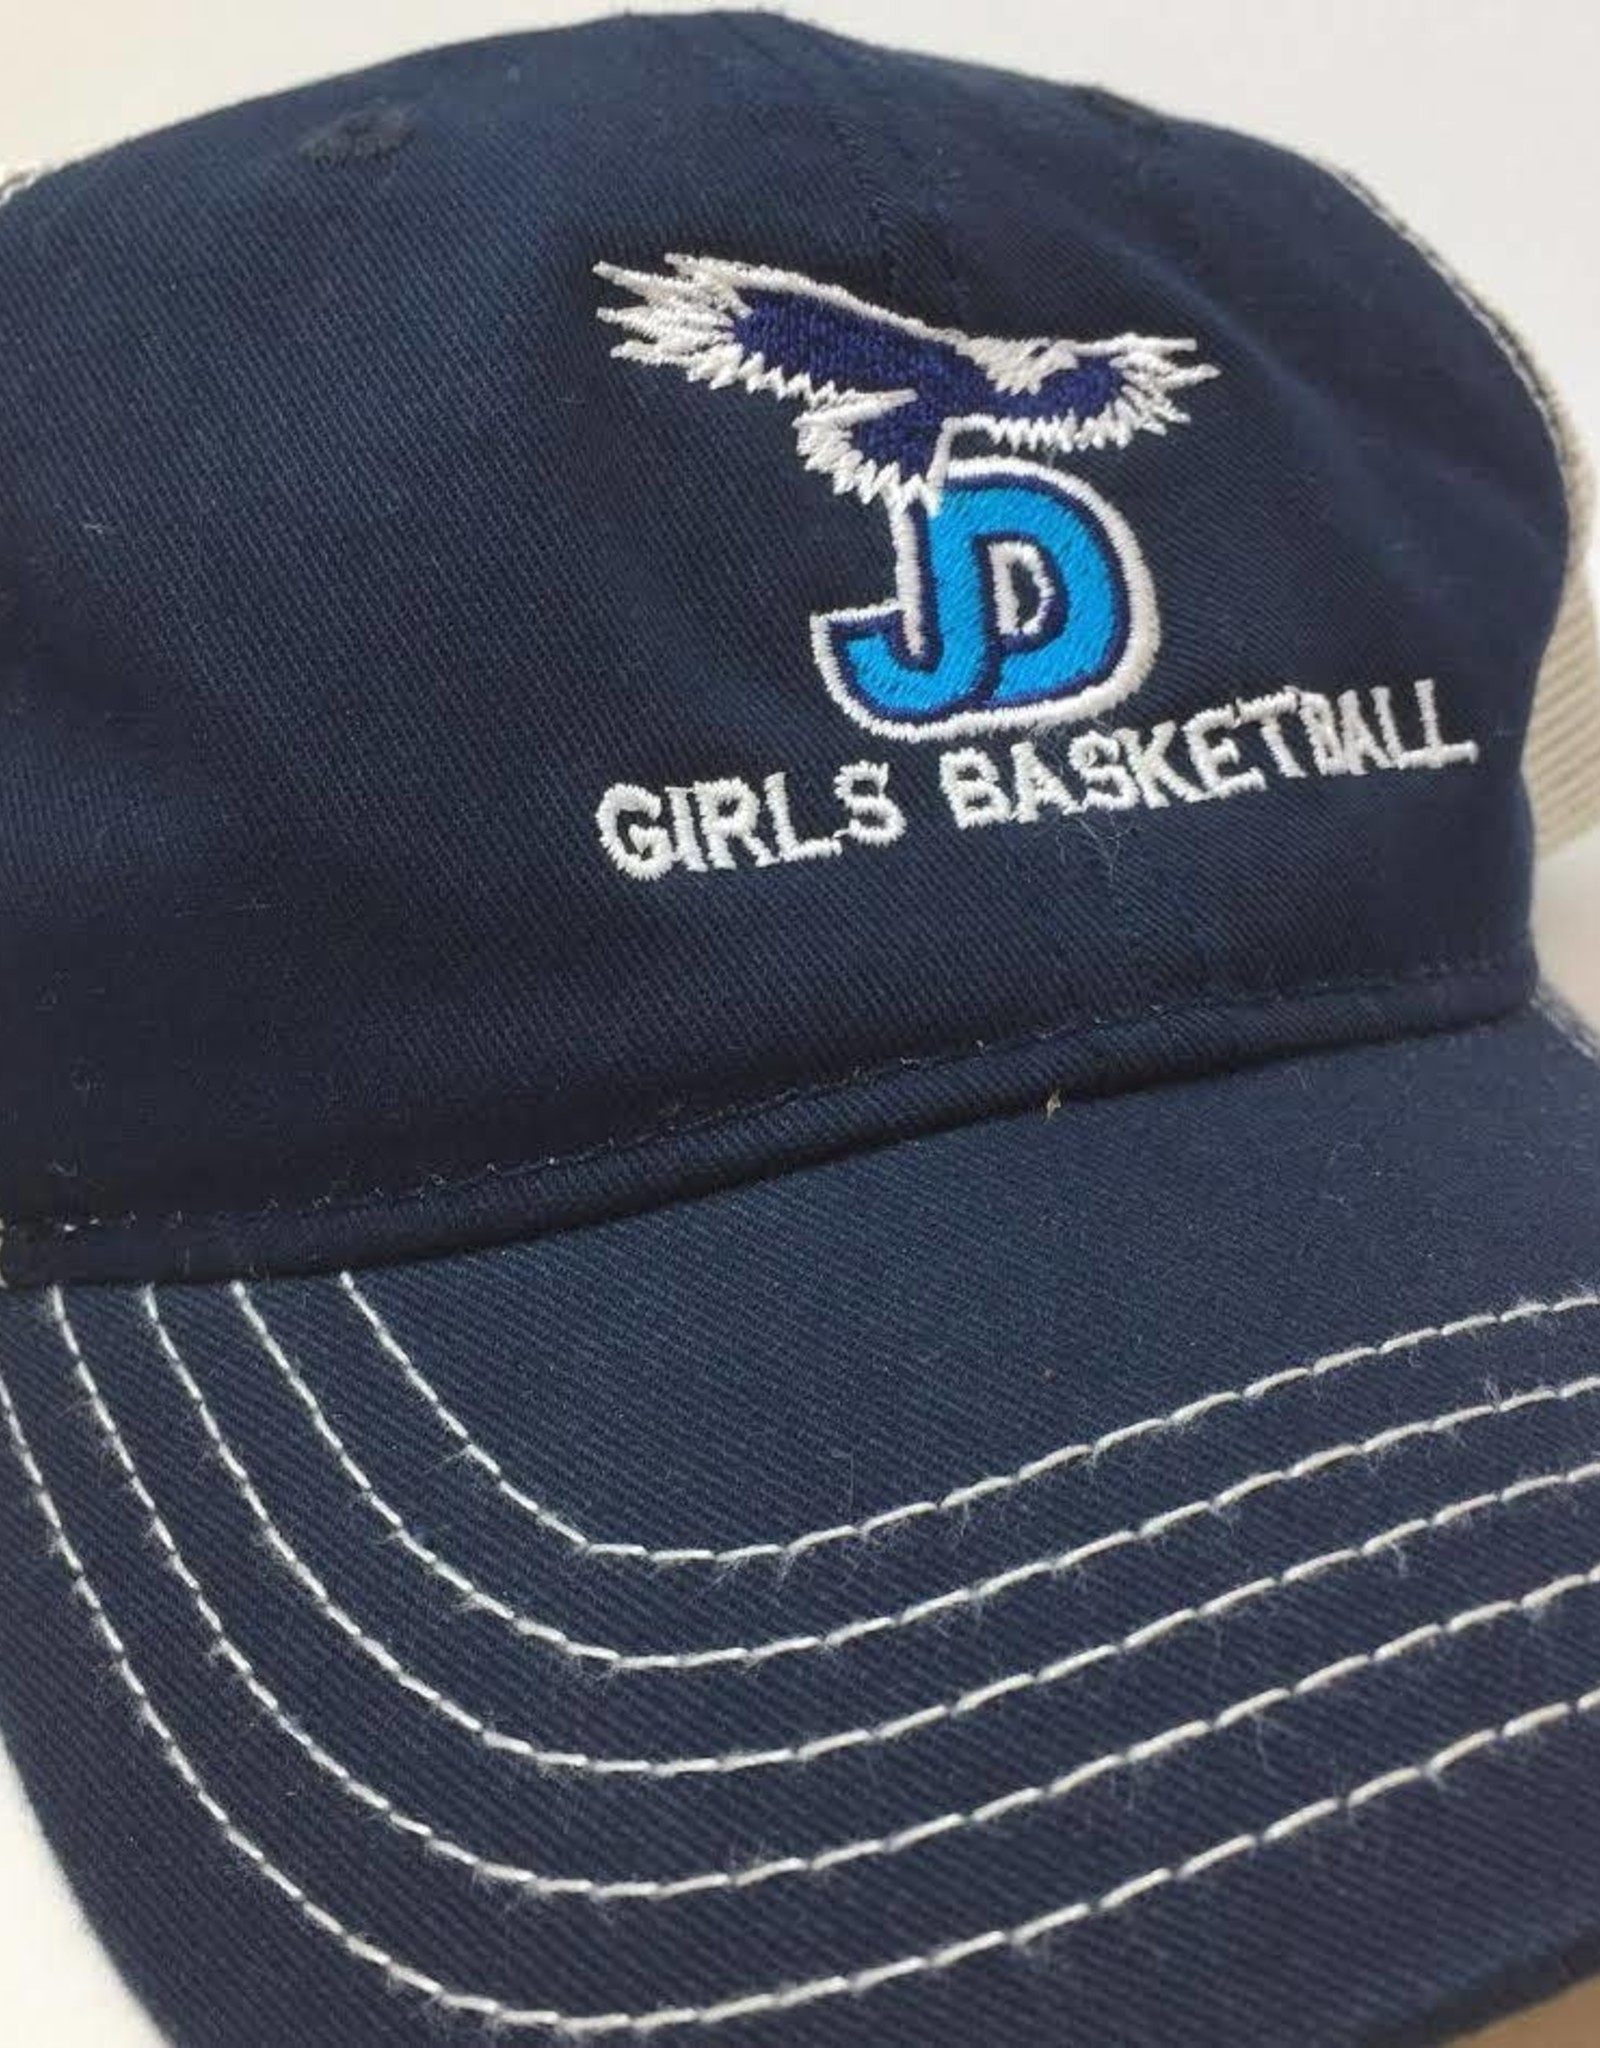 NON-UNIFORM JD Girls Basketball Soft mesh, enzyme-washed twill  cap